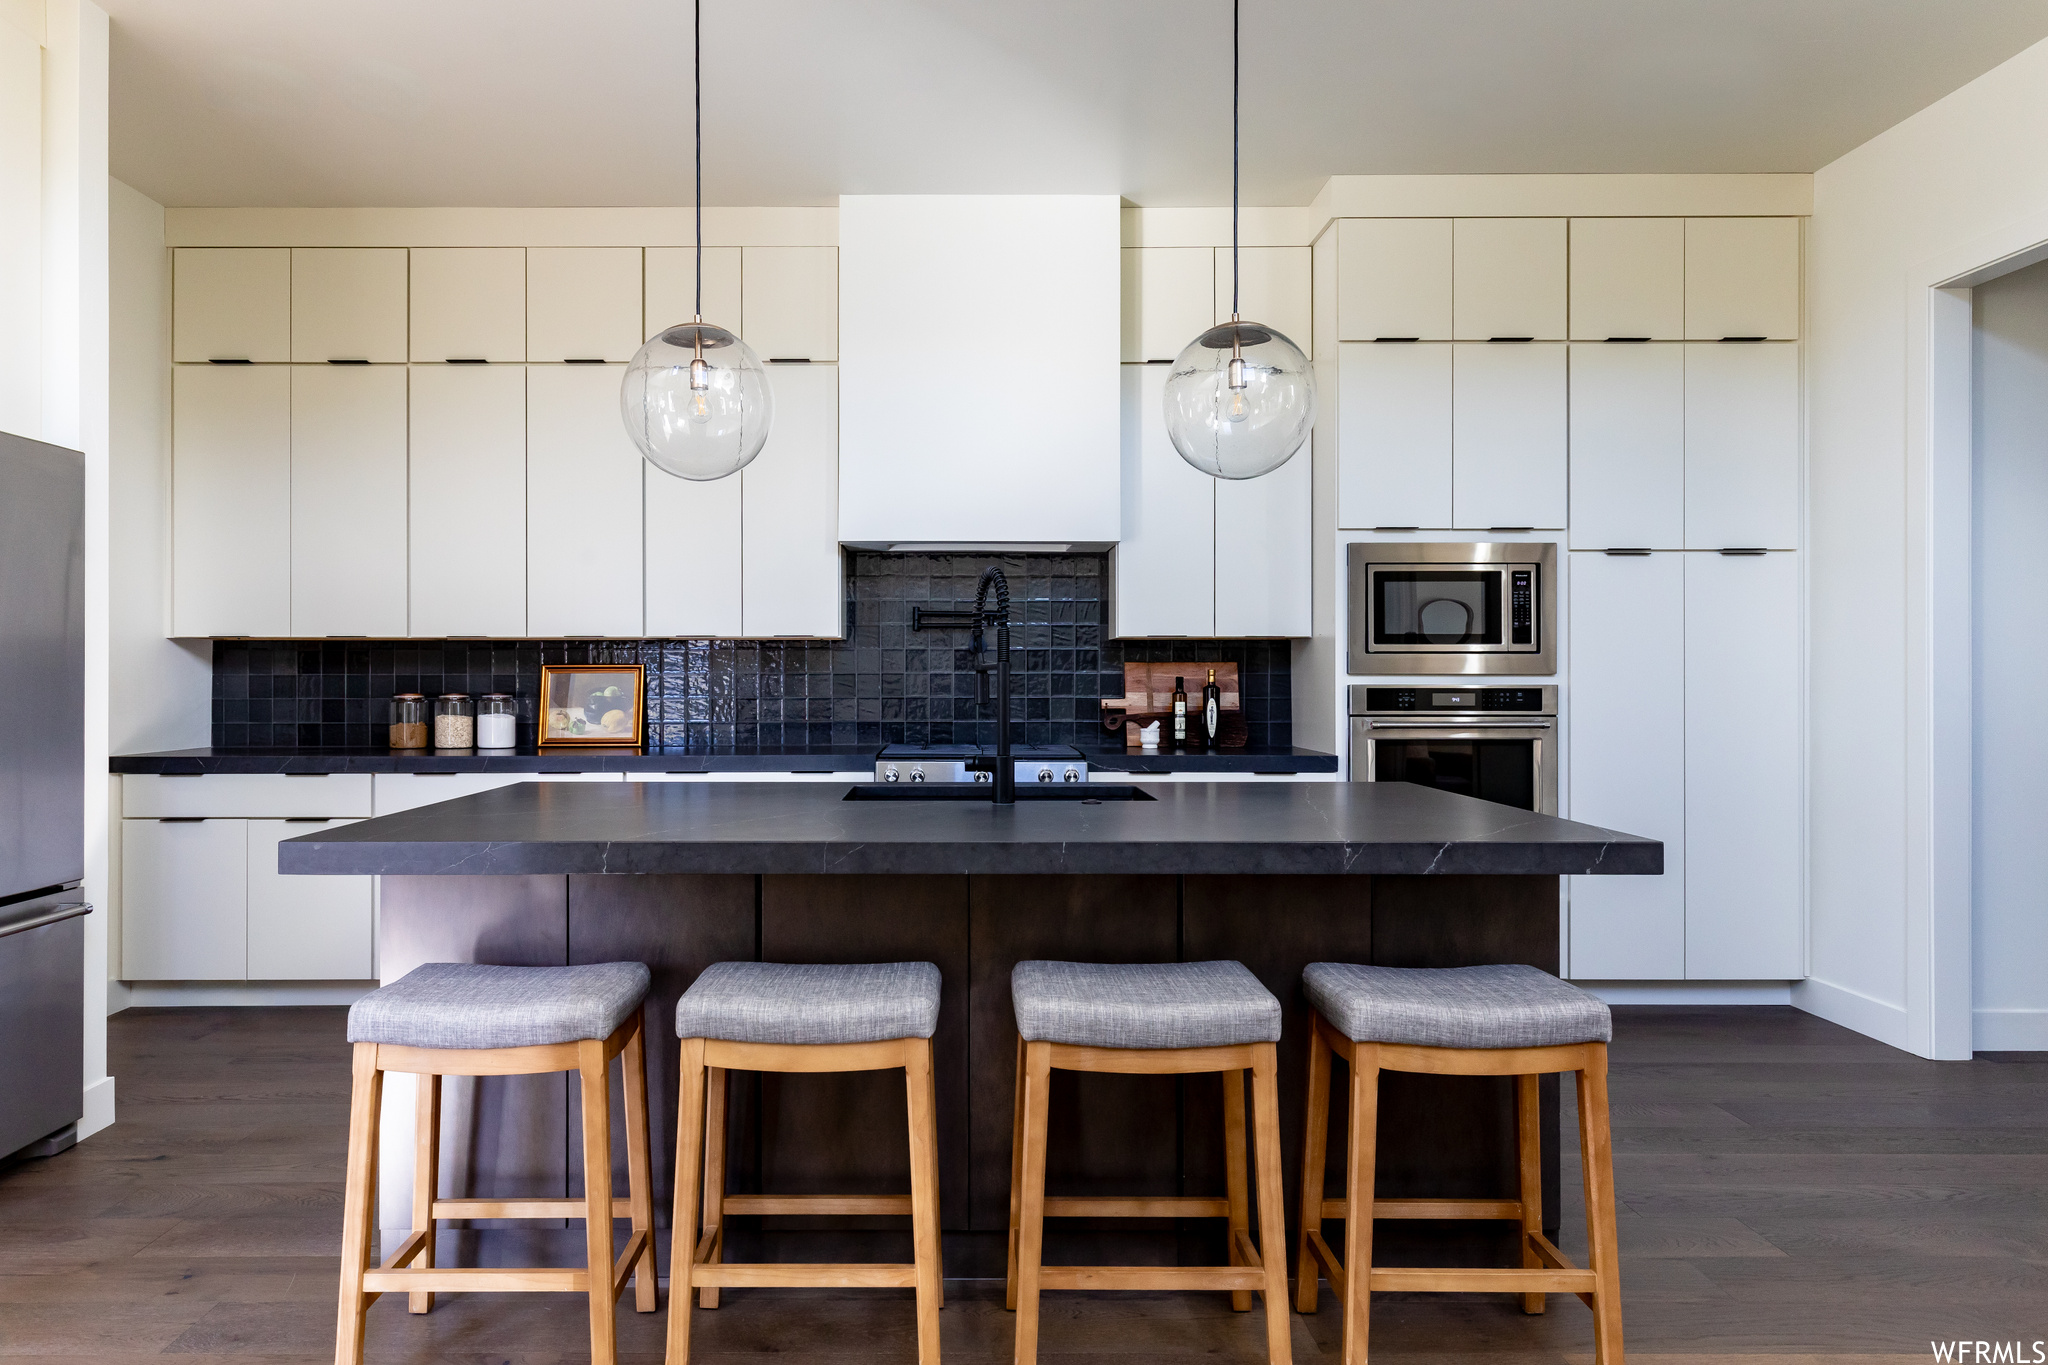 Kitchen featuring dark hardwood / wood-style floors, sink, stainless steel appliances, and backsplash